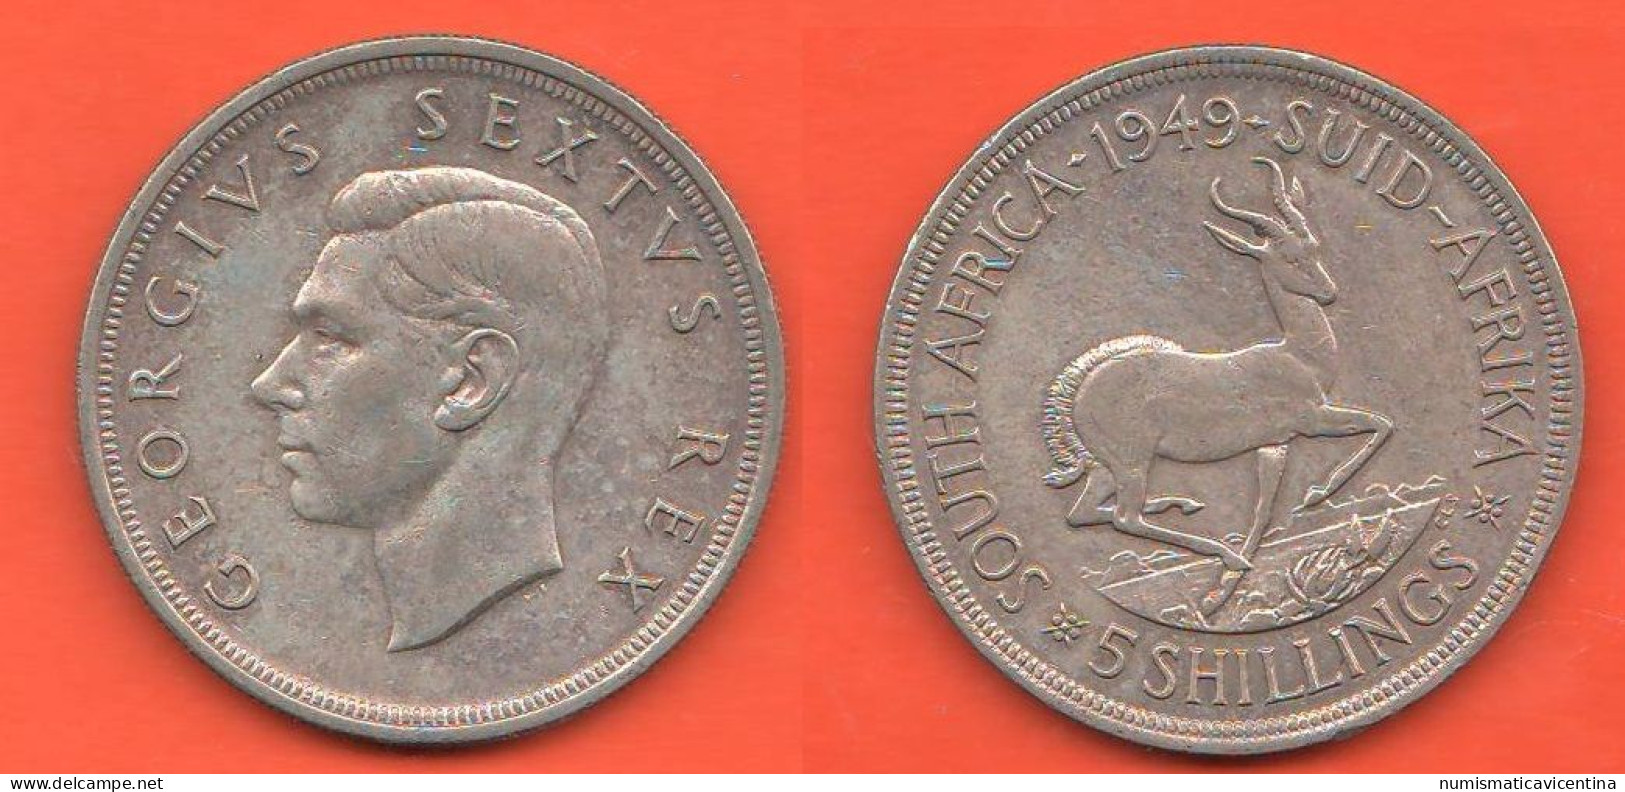 South Africa 5 Shillings 1949 Sud Africa Suid Afrika Silver Coin  King Georgius VI° - Südafrika